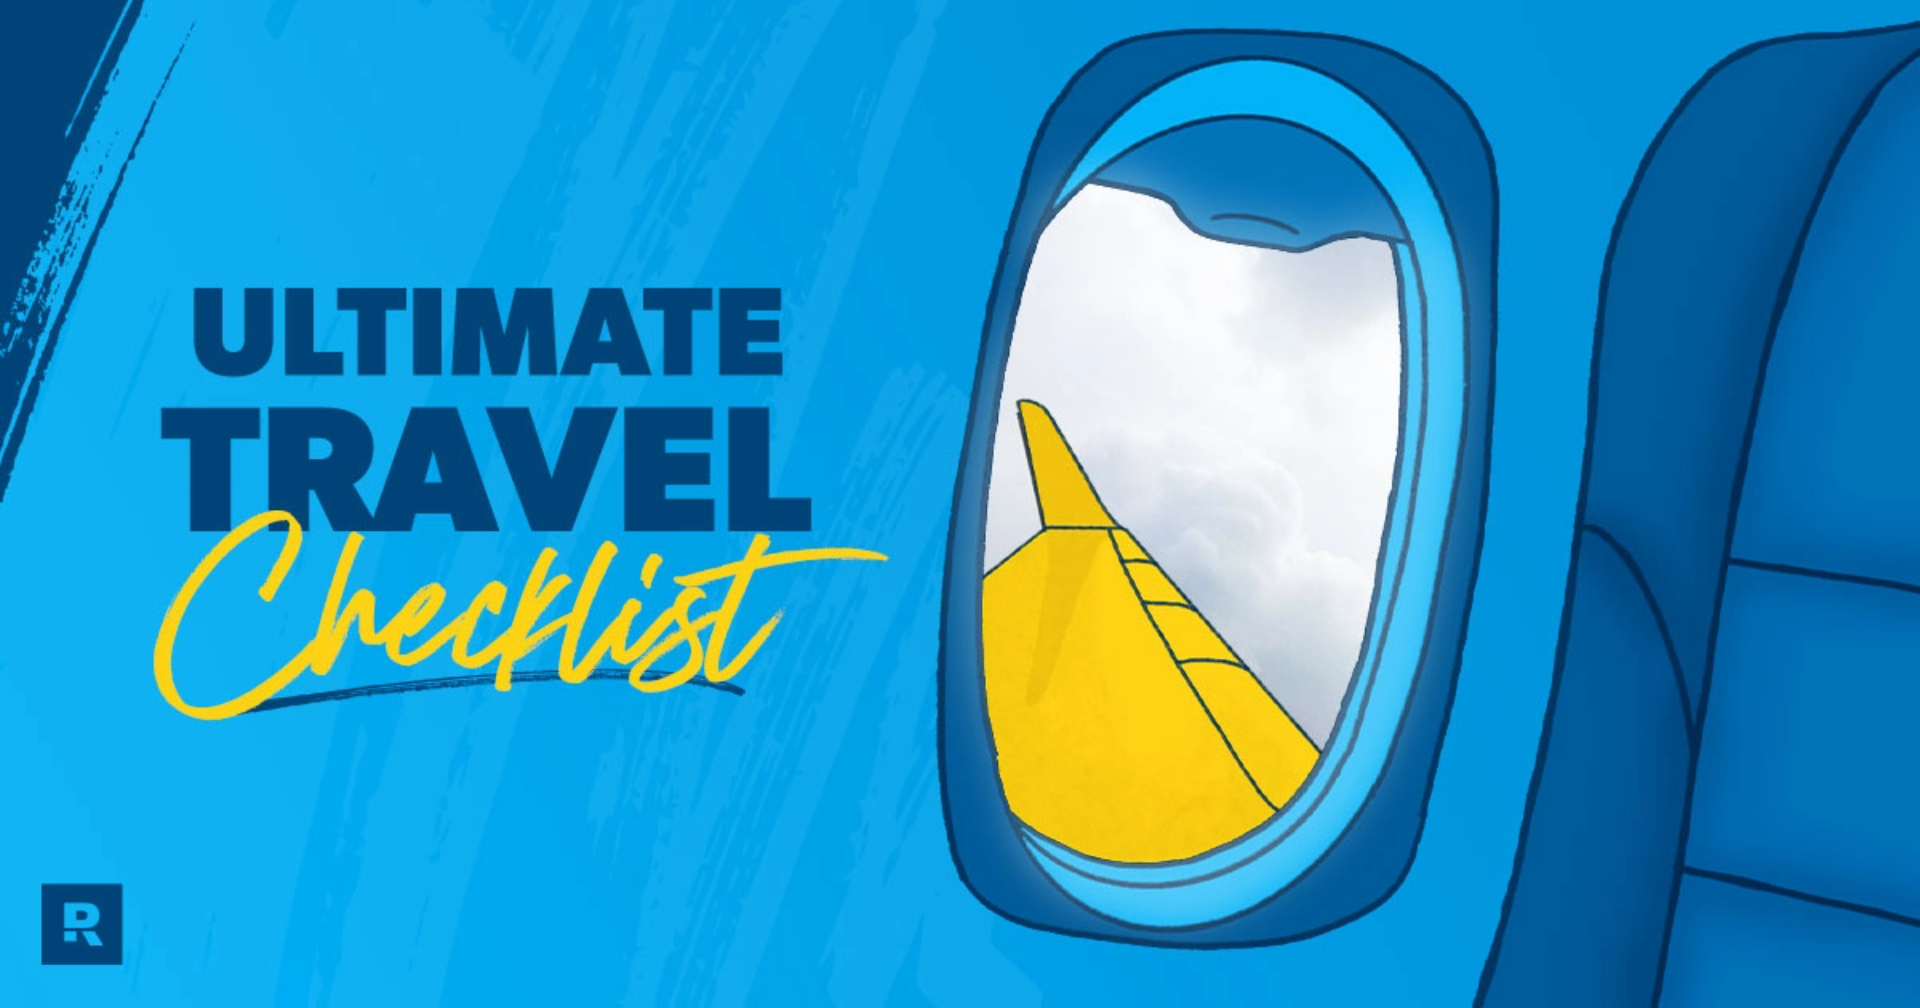 Ultimate Travel Checklist blog header